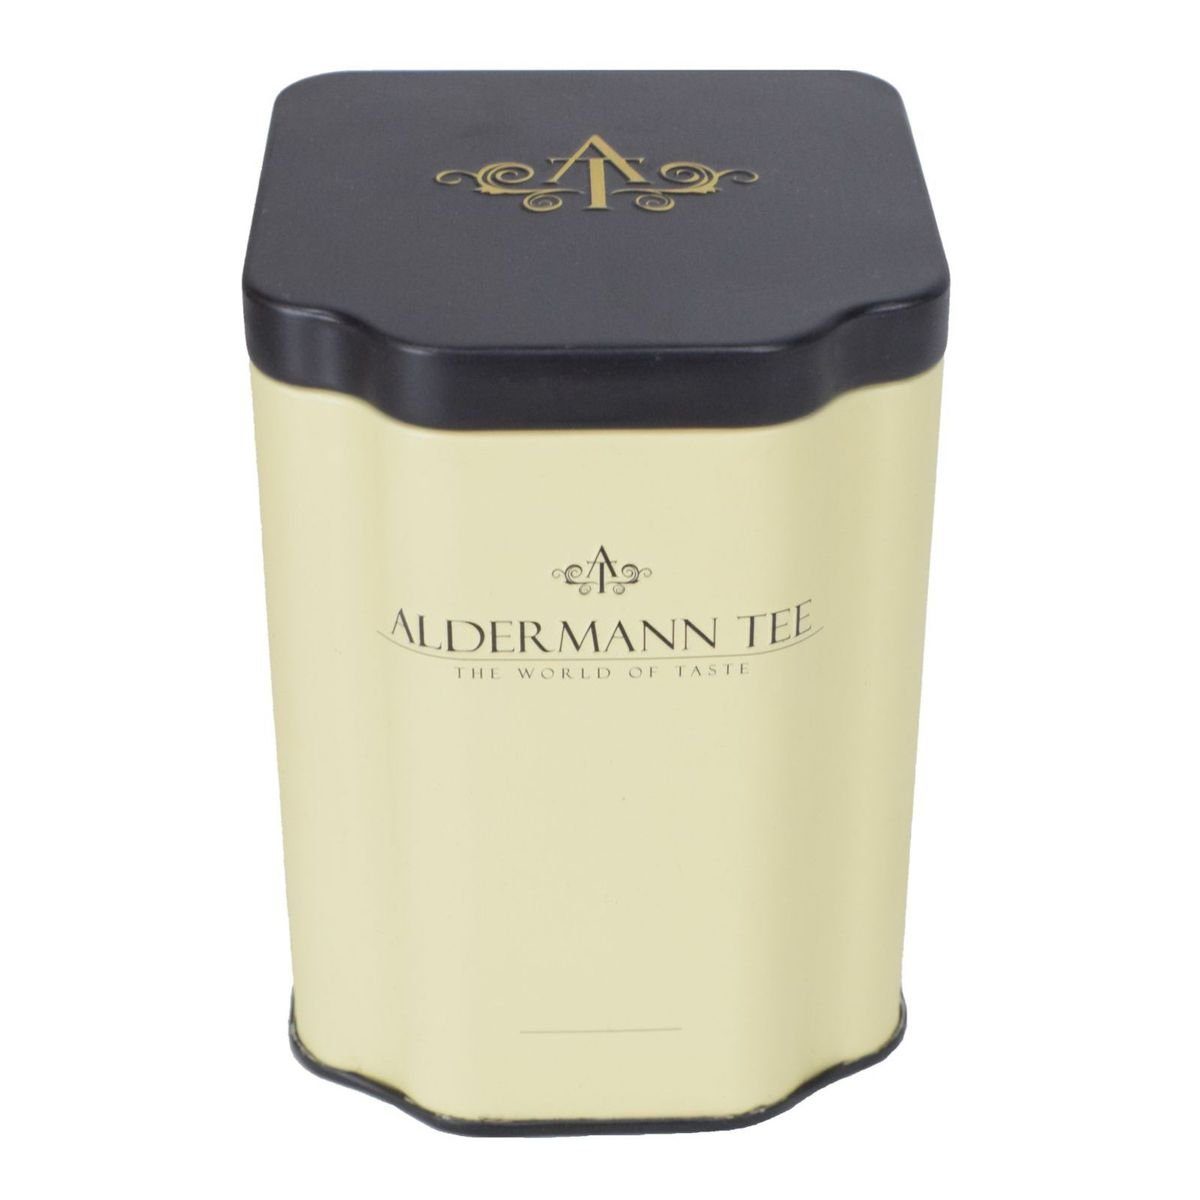 Teebox "Aldermann Tee" Teedose, schwarzer Deckel, 8x8x11 cm Gewürze, Metall | Teedosen